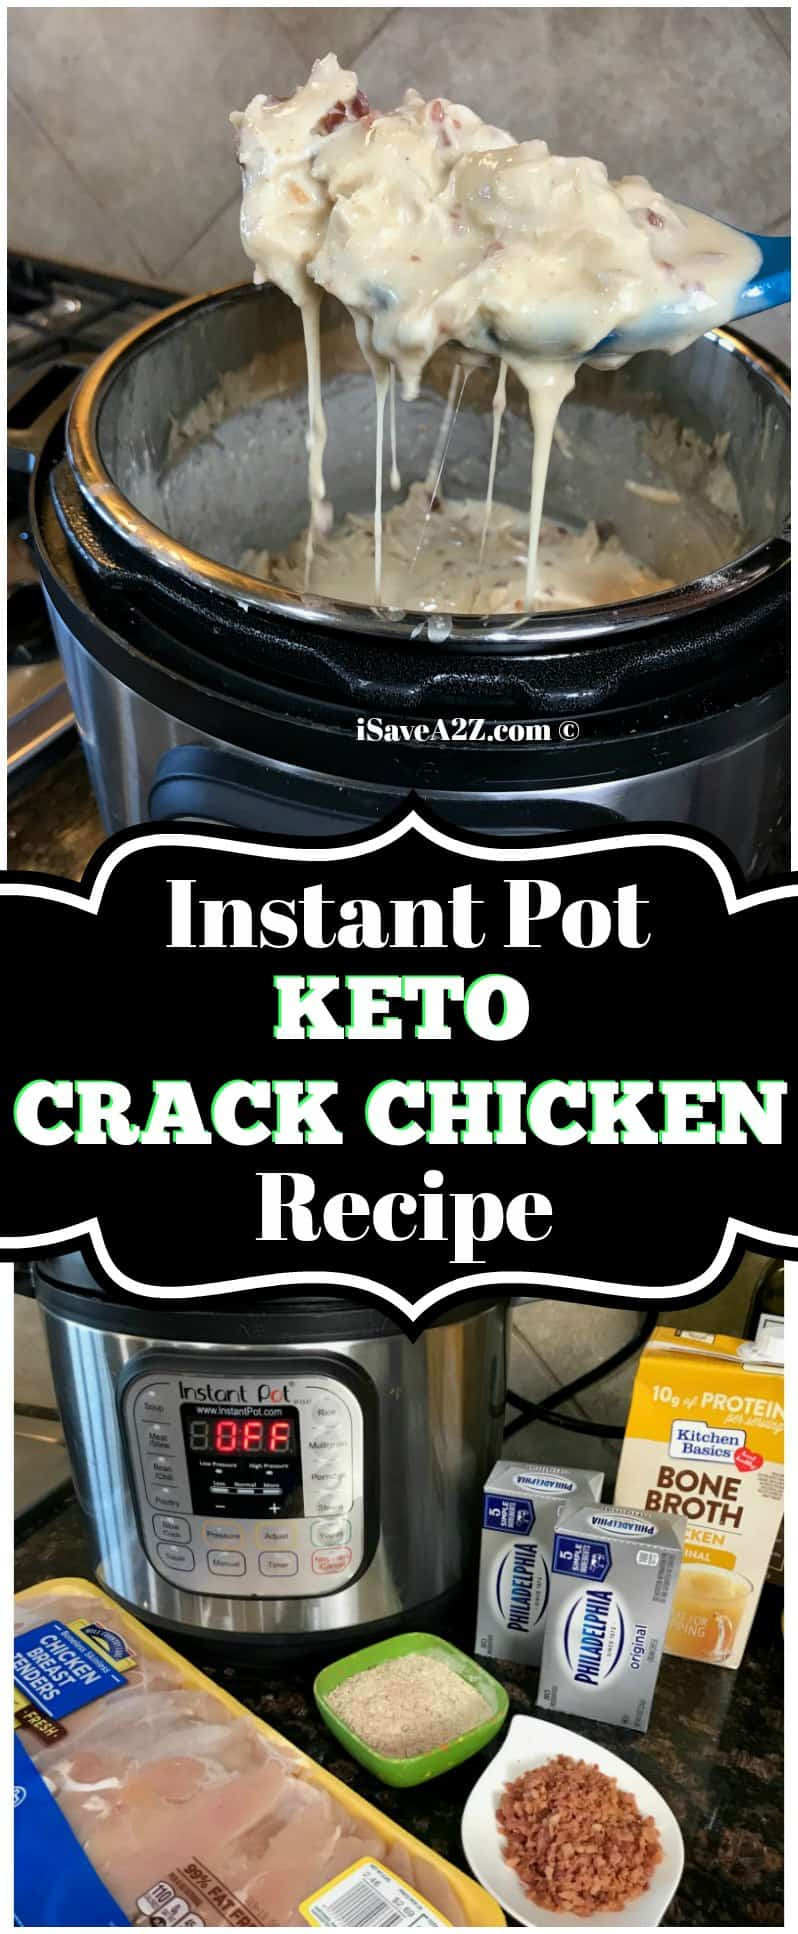 Instant Pot Keto Recipes
 Instant Pot Keto Crack Chicken Recipe iSaveA2Z